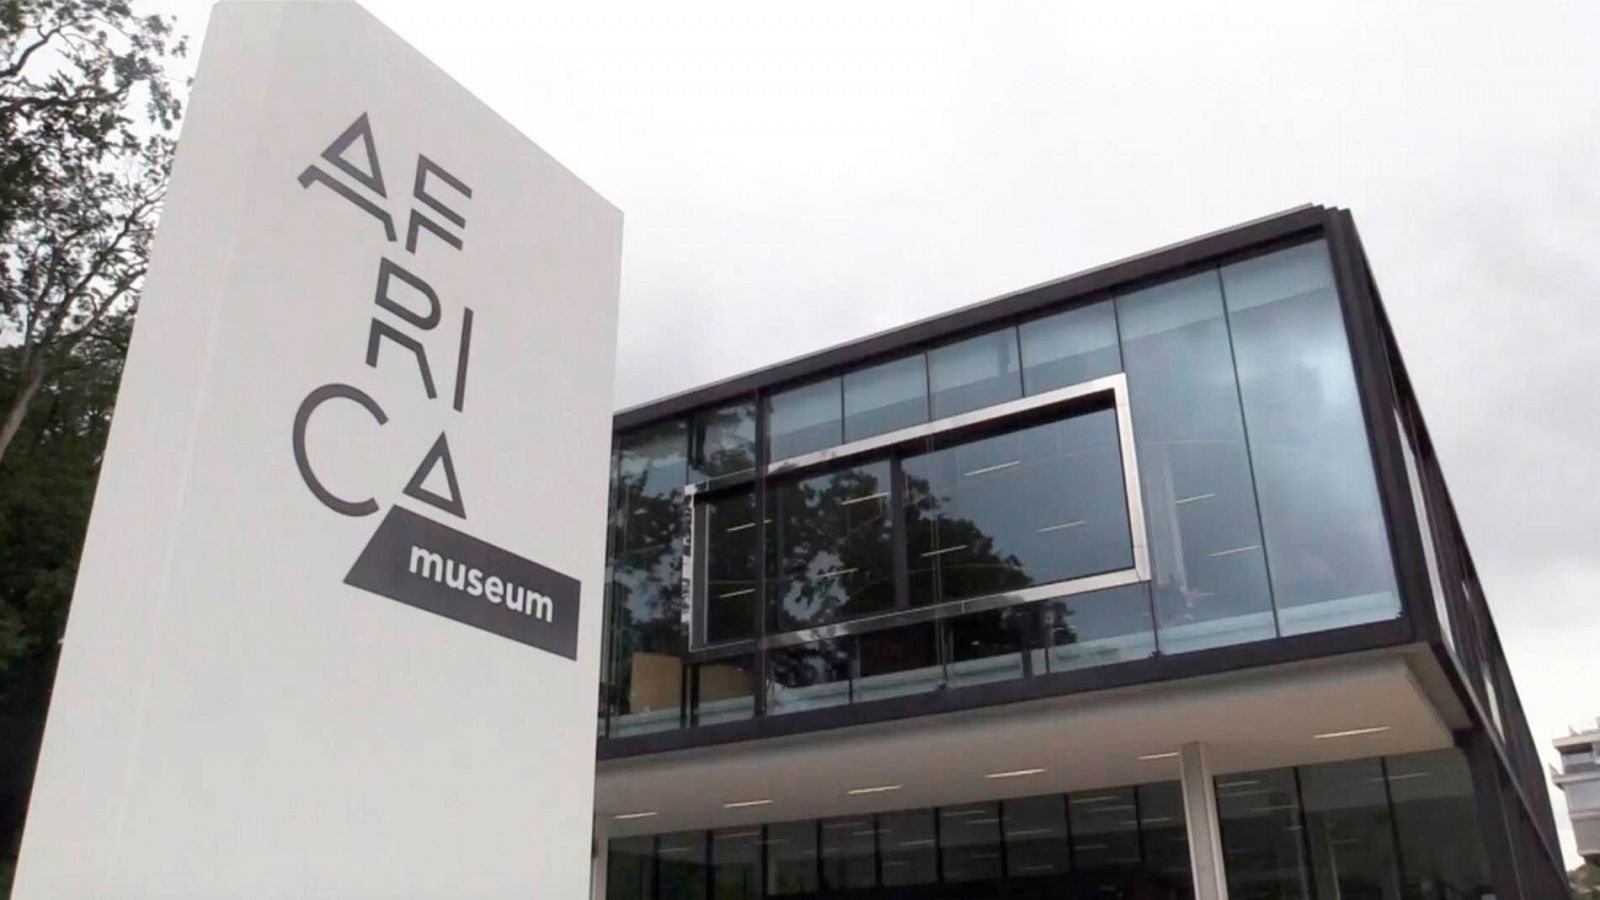 Bélgica pretende devolver todas las obras de arte expoliadas a sus antiguas colonias africanas - RTVE.es